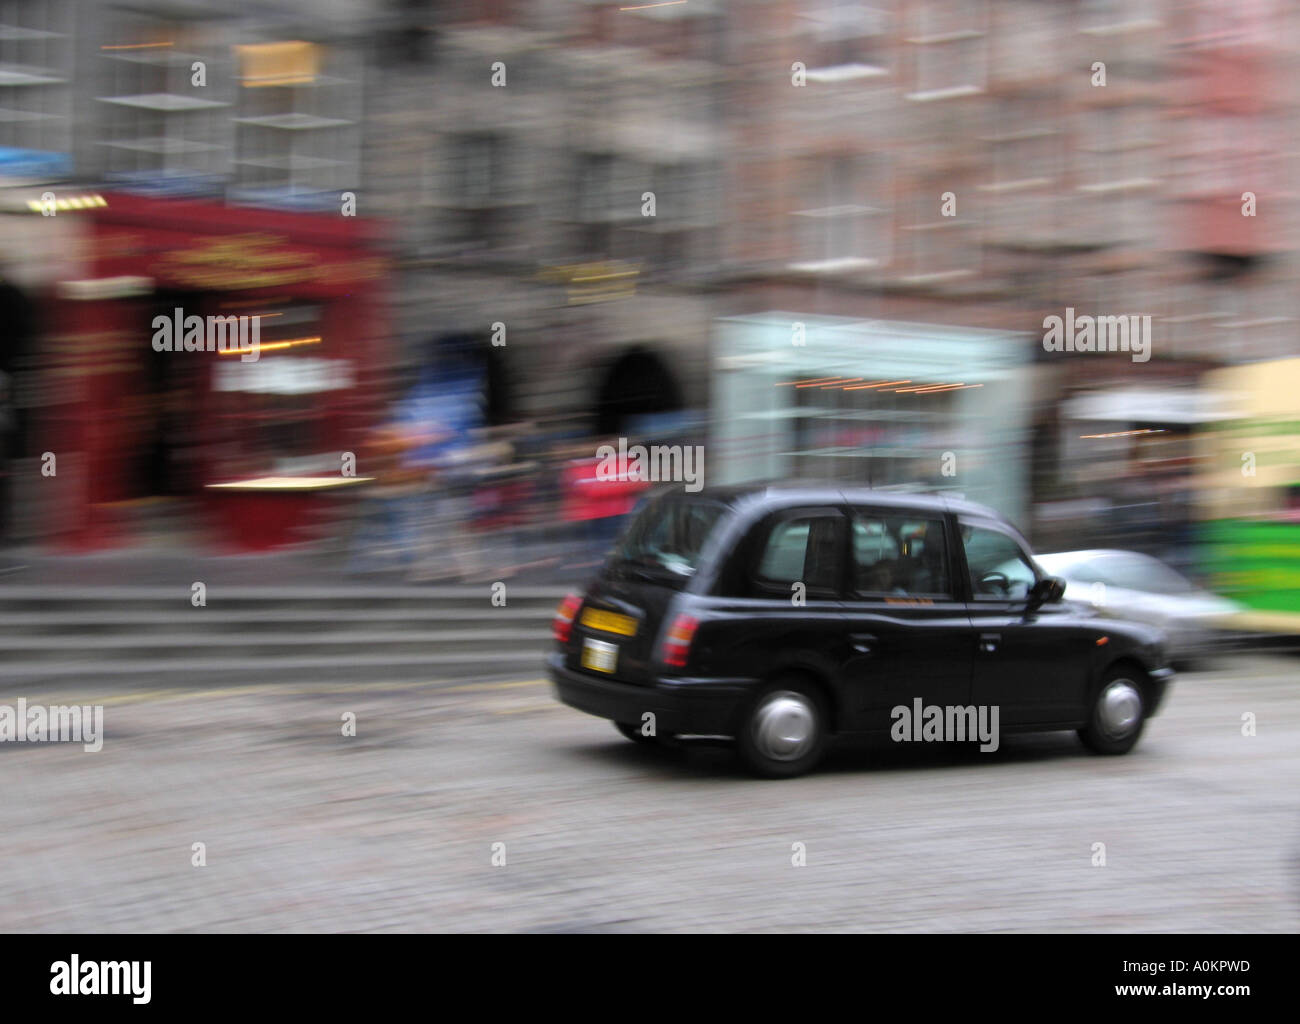 A black cab on Edinburgh's royal mile Stock Photo